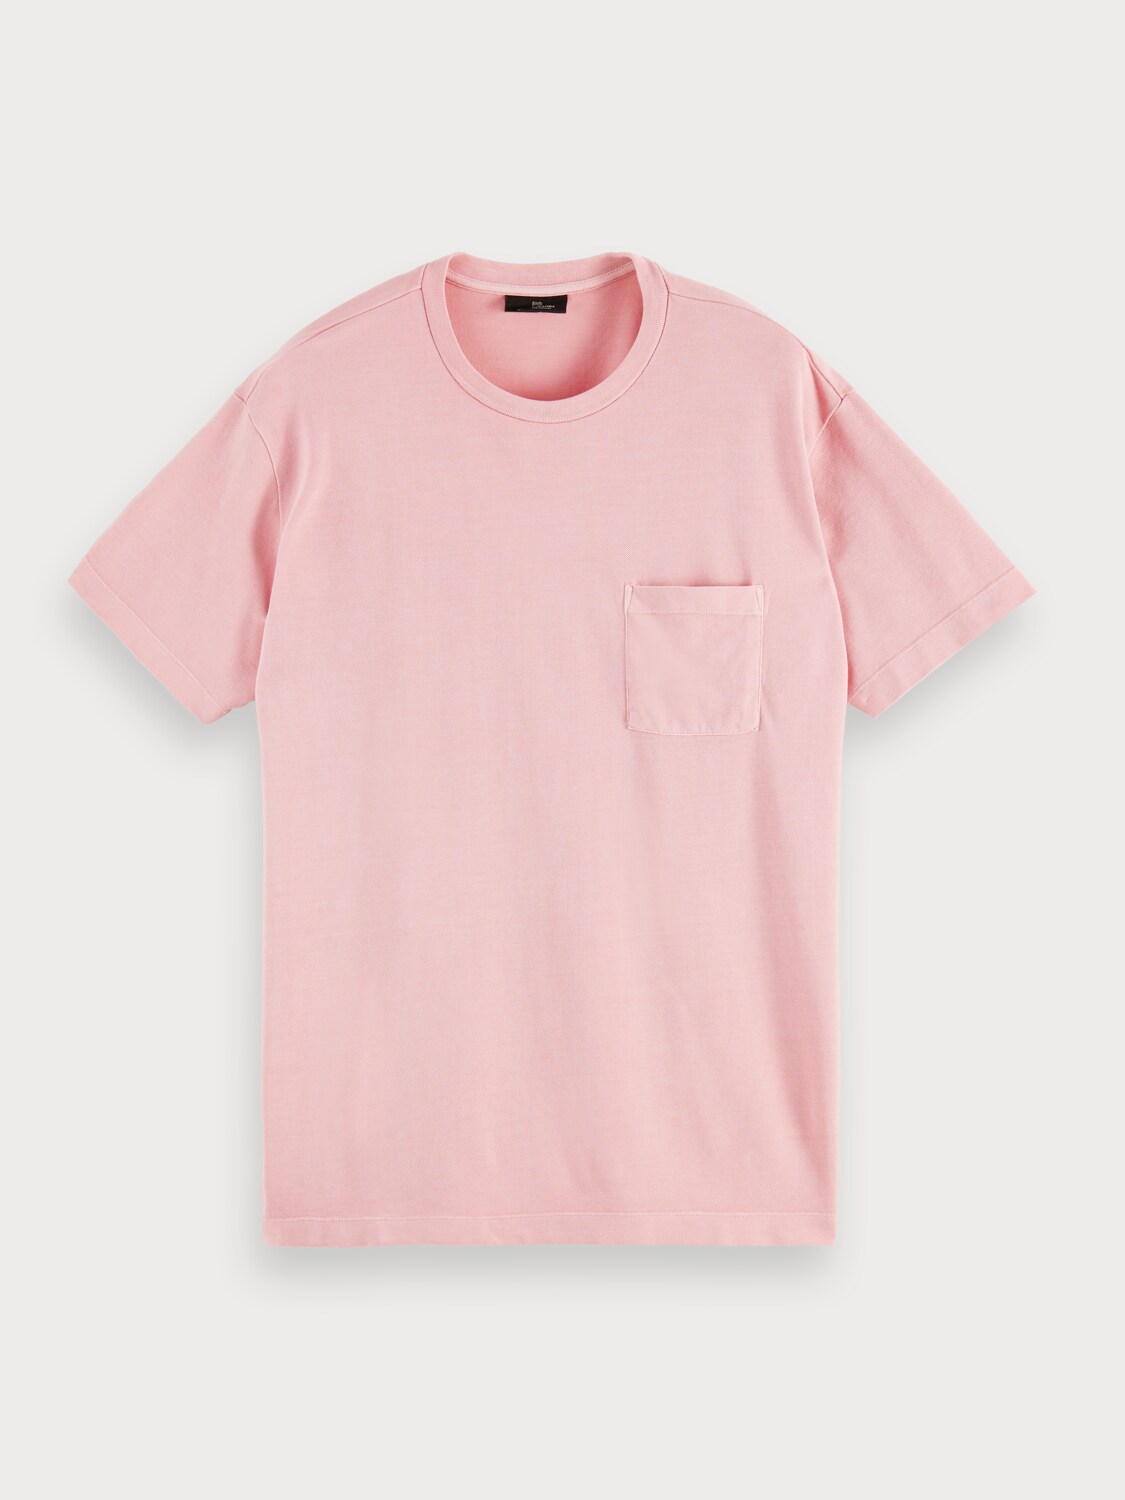 Organic cotton garment-dyed pique crewneck t-shirt